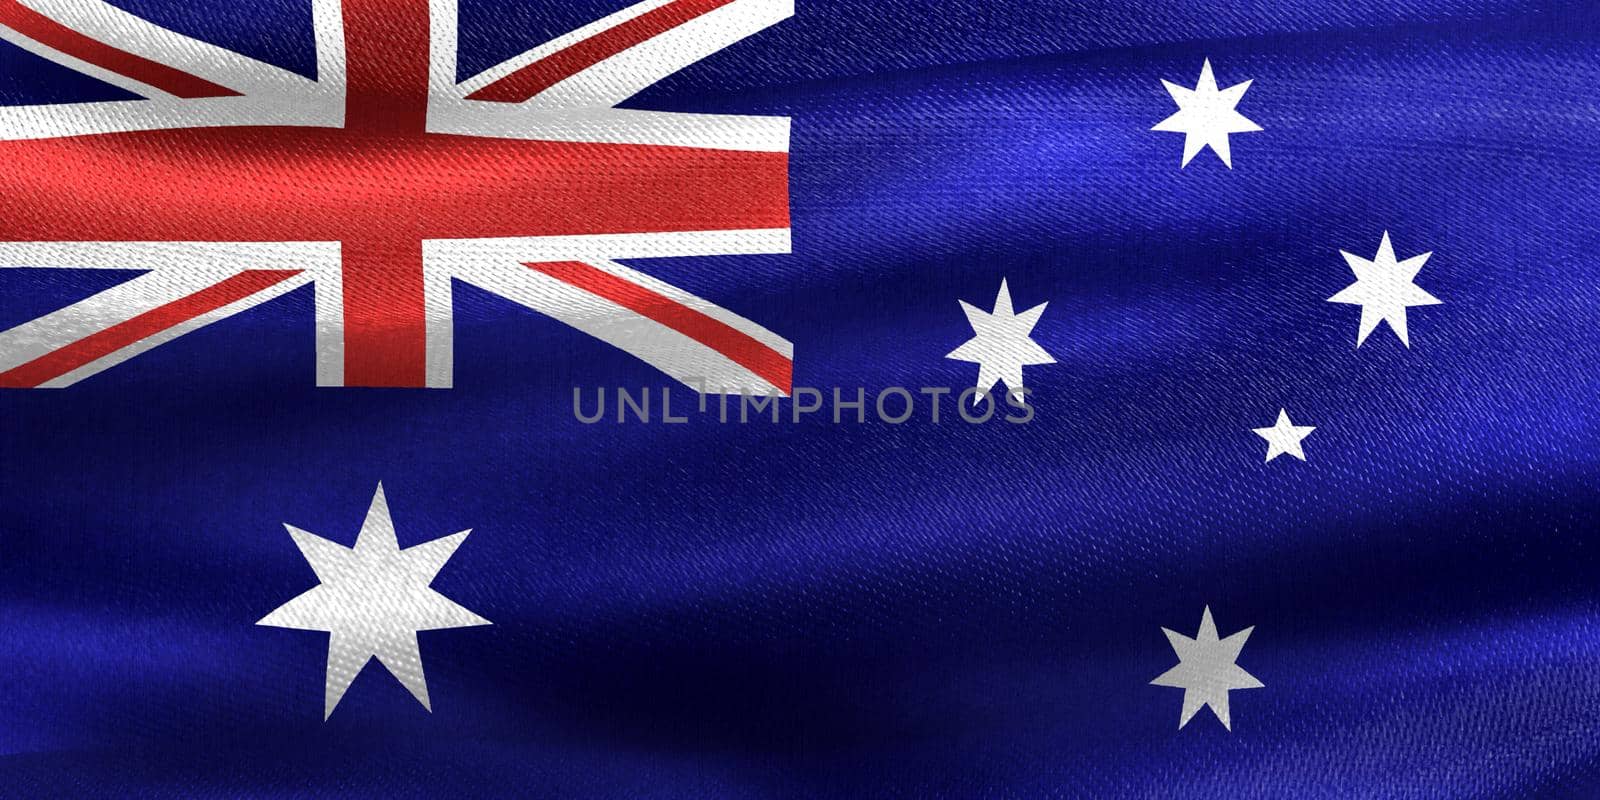 Heard Island and McDonald Islands flag - realistic waving fabric flag by MP_foto71